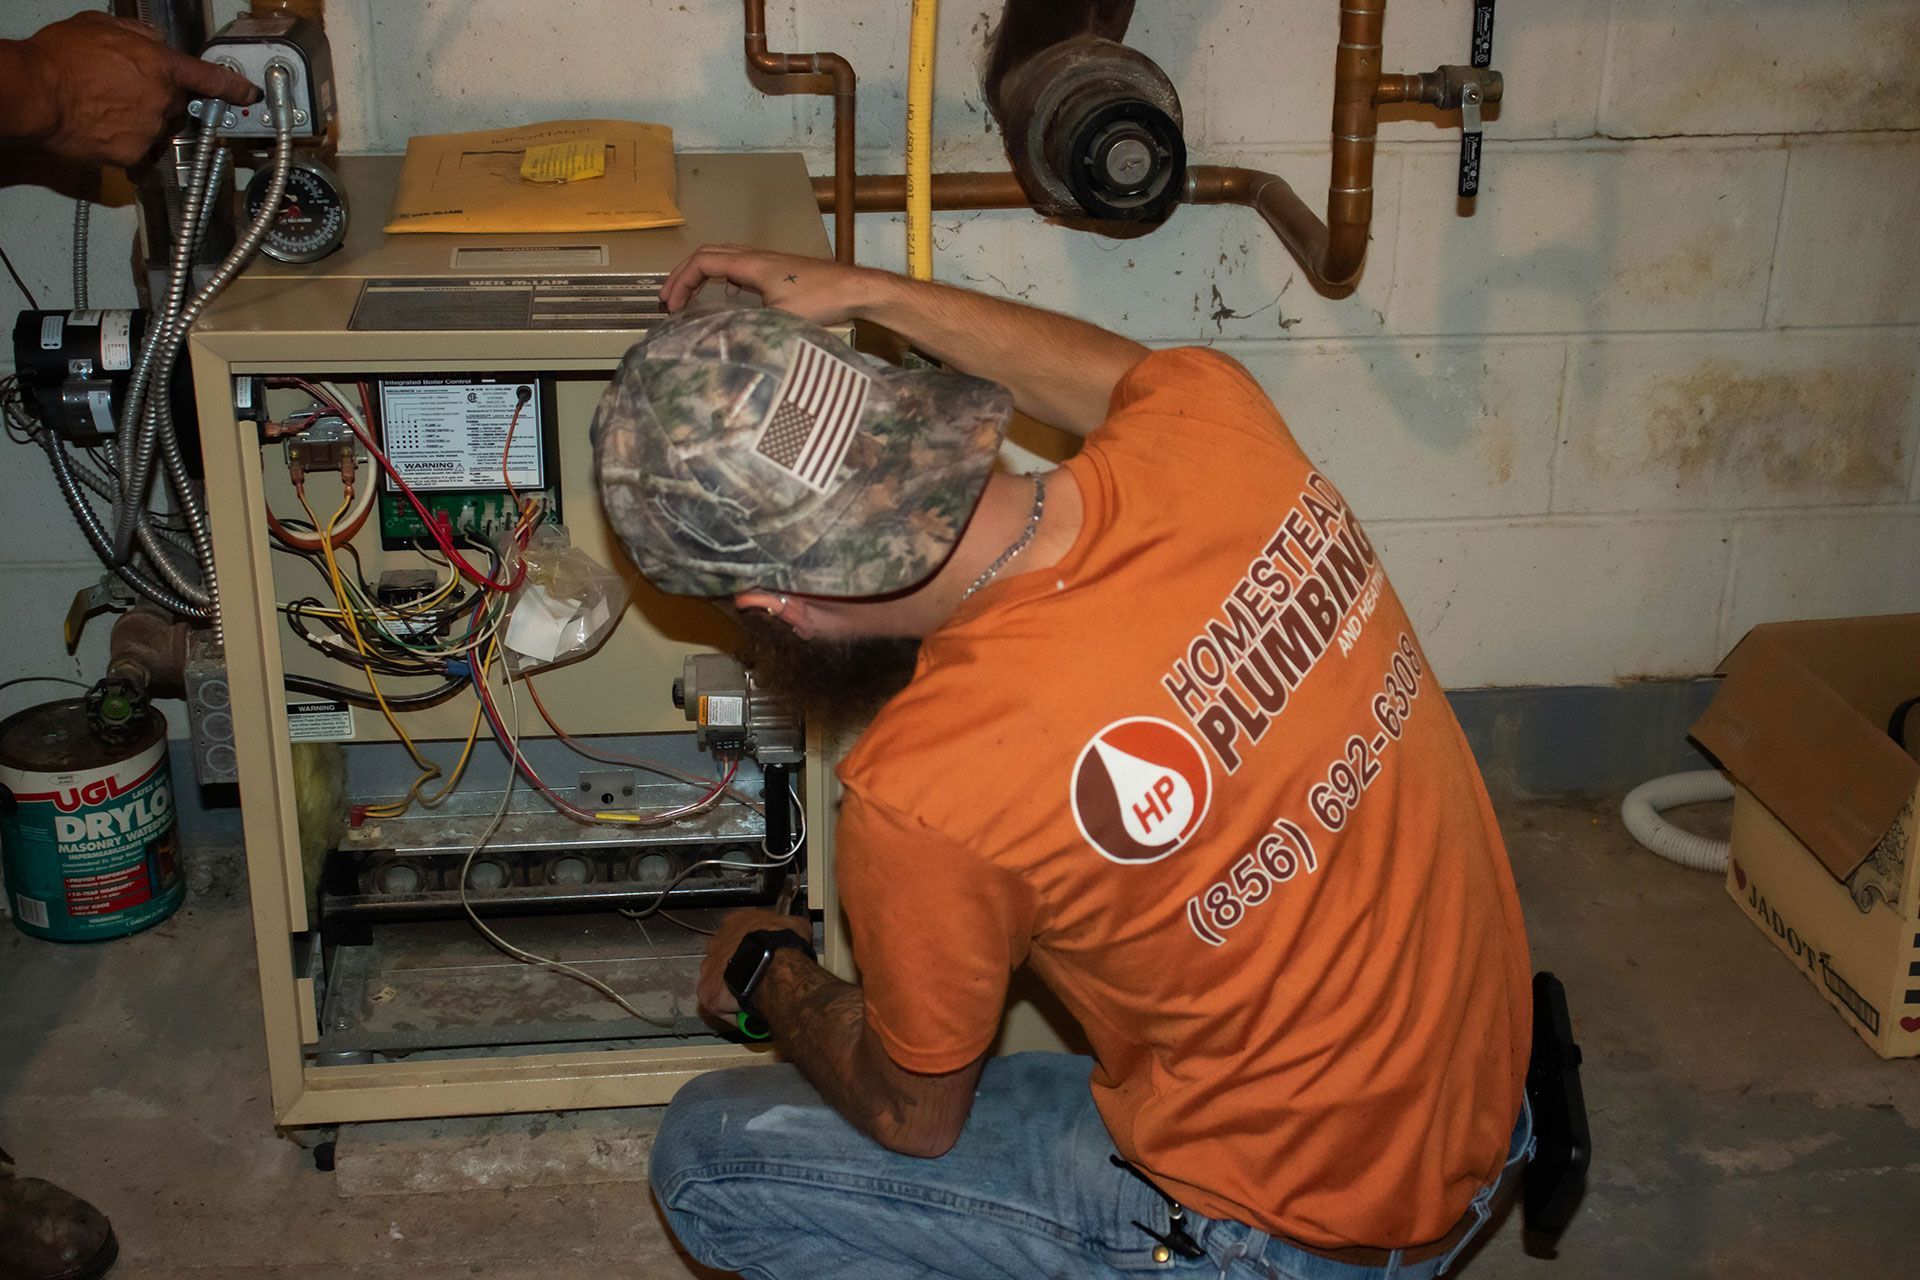 A man wearing an orange company shirt fixing a heating system